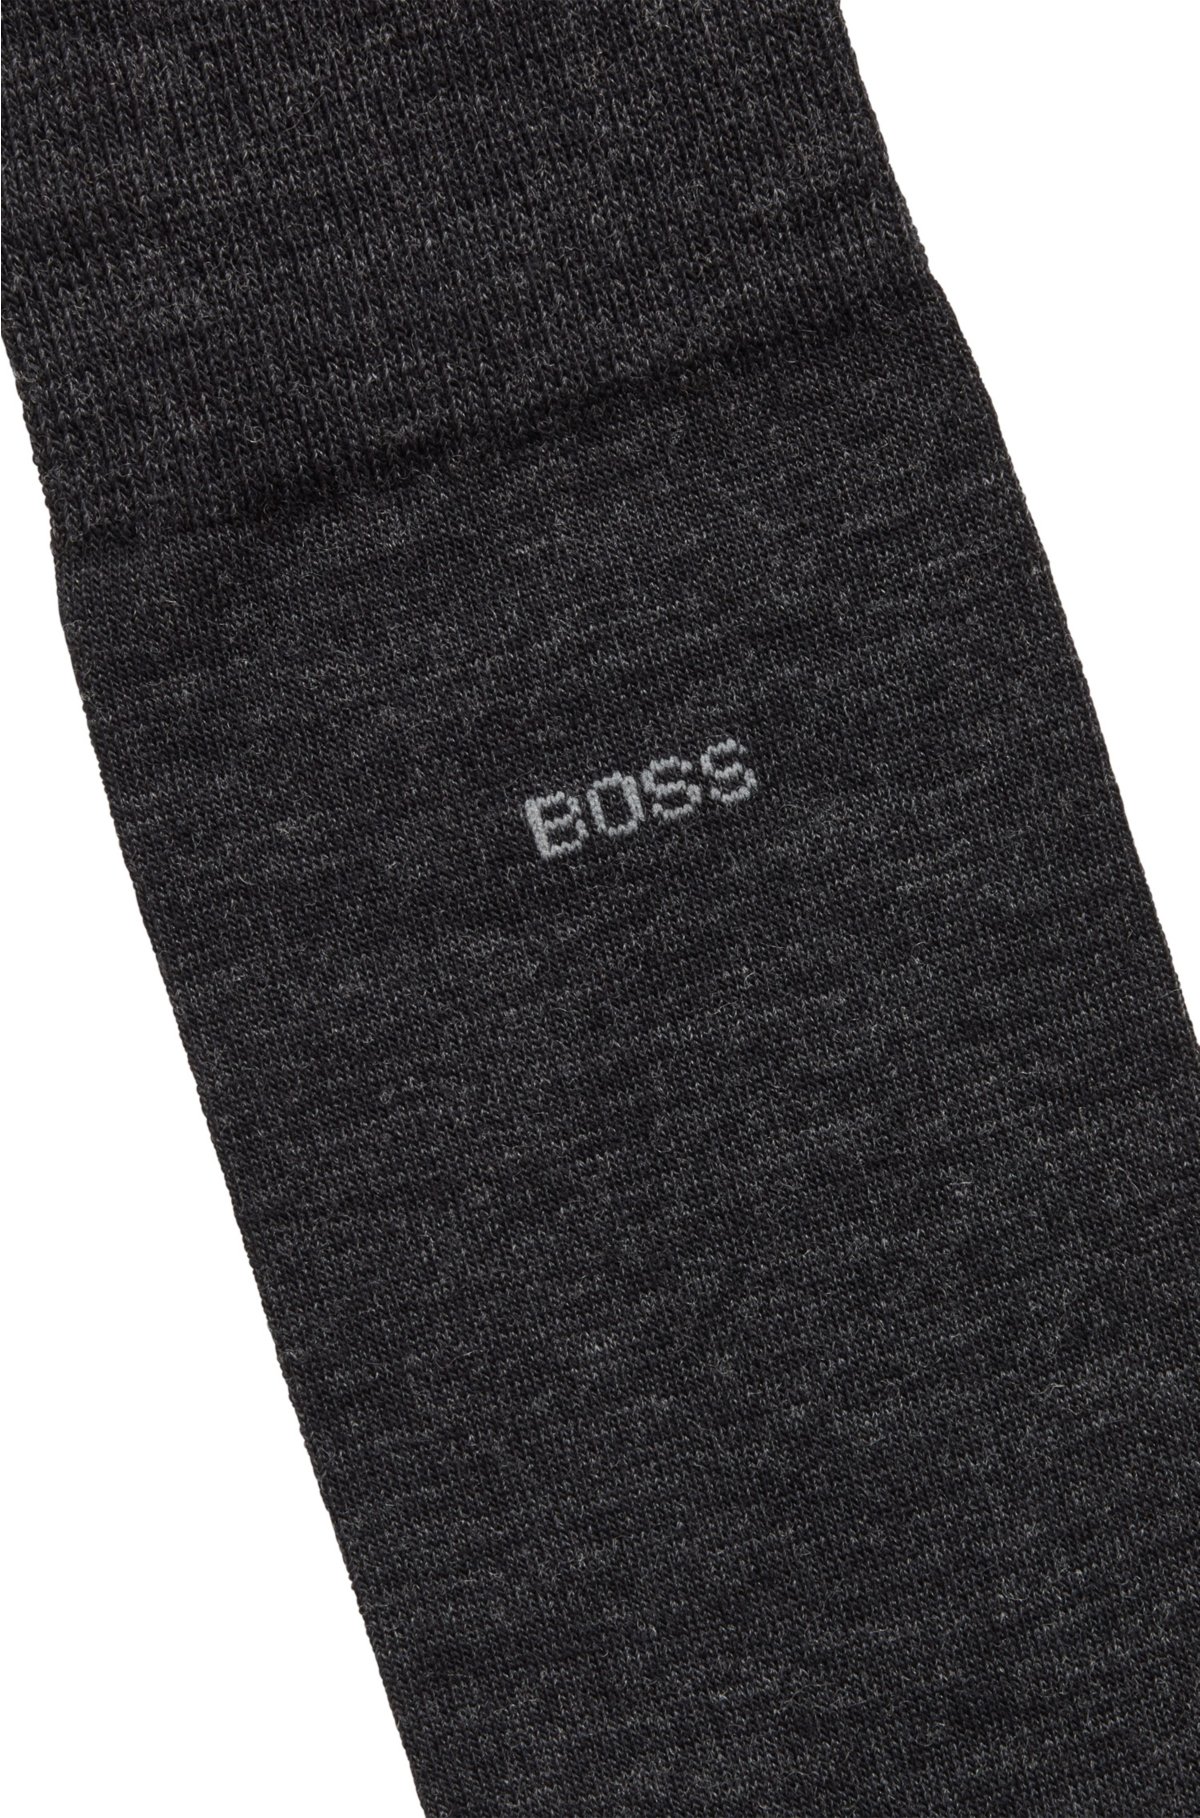 Regular-length logo socks in a wool blend, Dark Grey